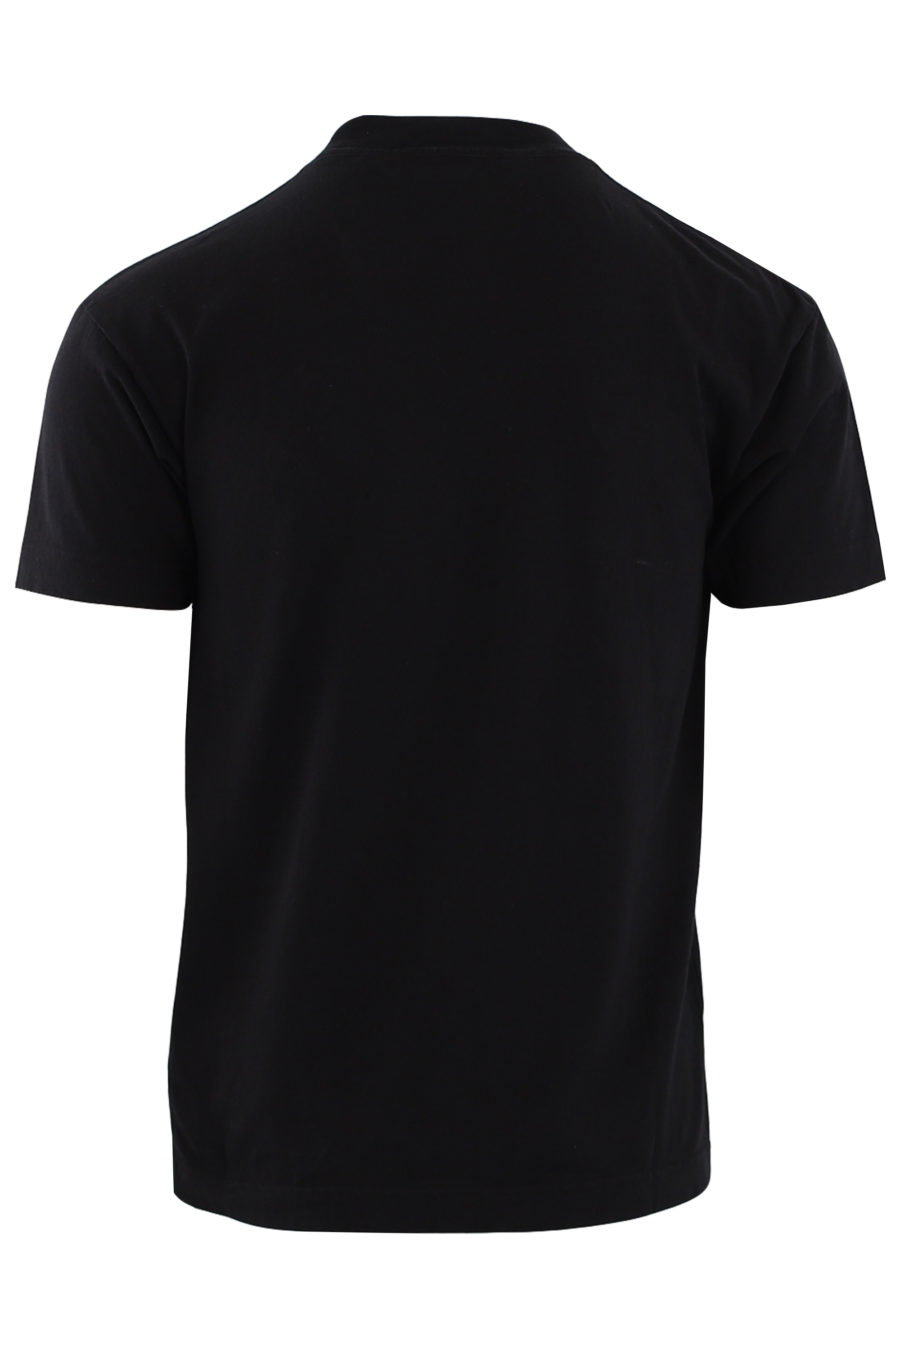 Camiseta negra con motivo oso "Spray" - IMG1 9195